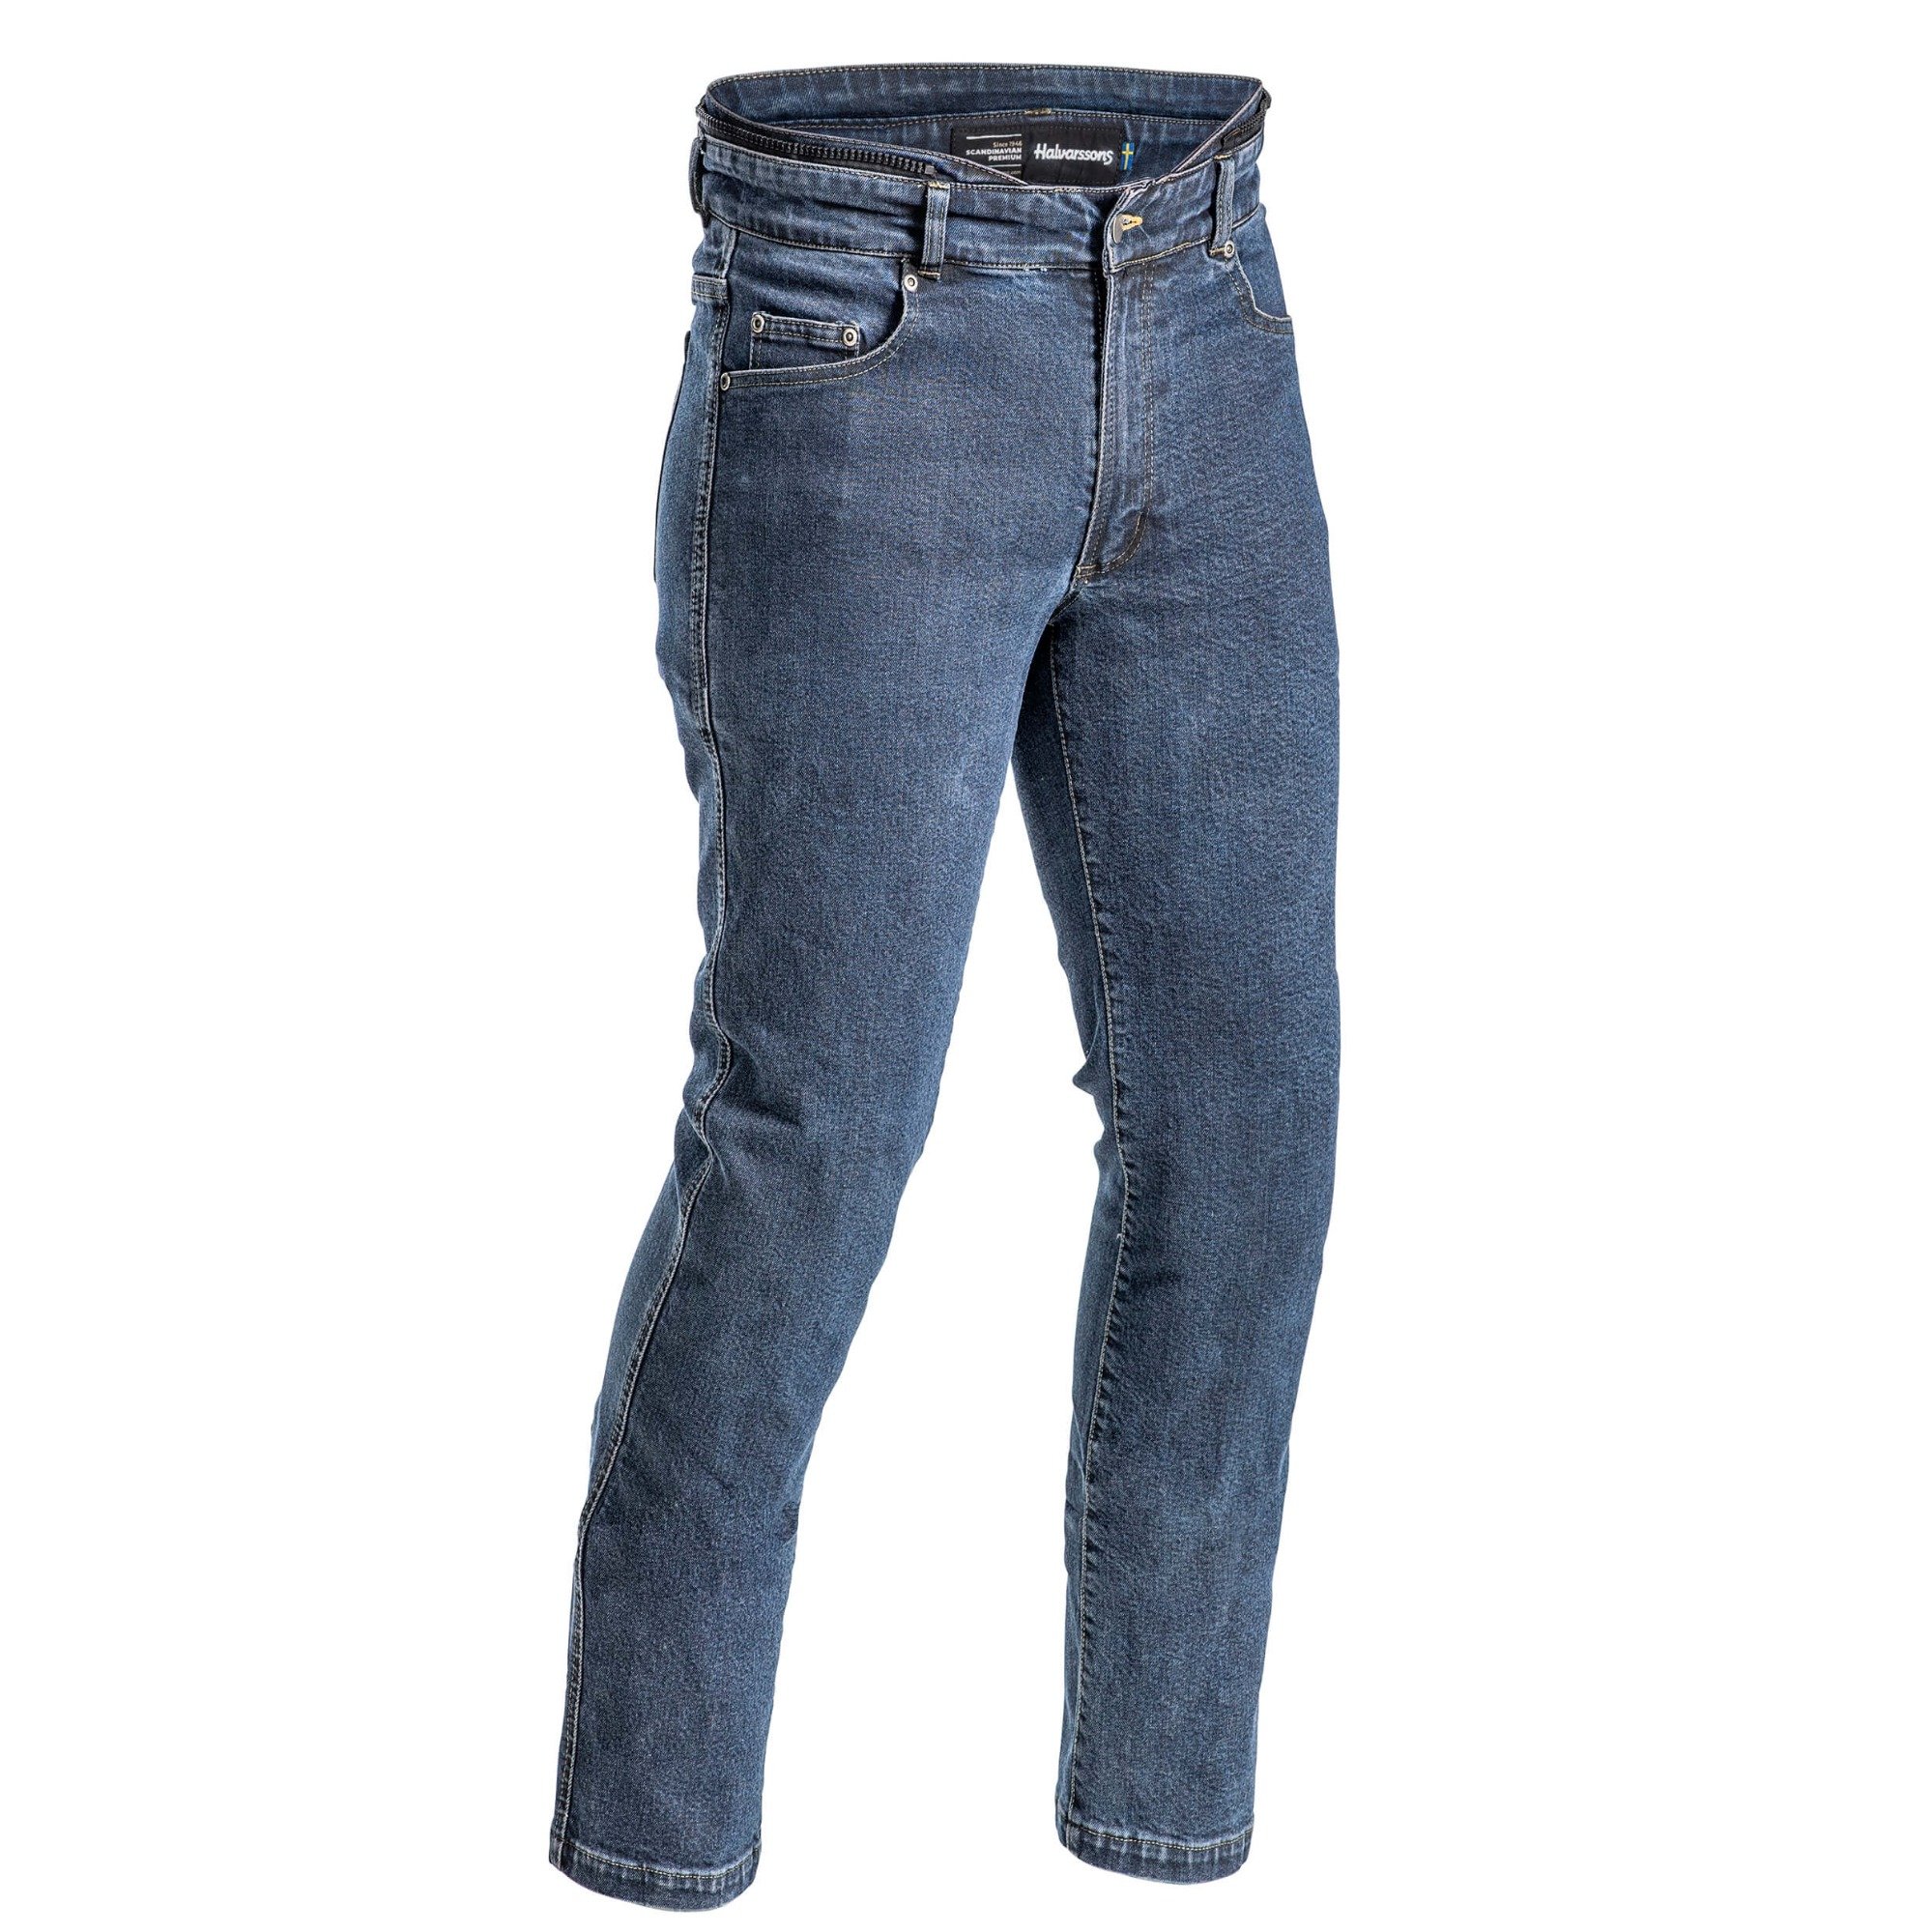 Image of Halvarssons Jeans Rogen Blue Short Size 50 ID 6438235239034